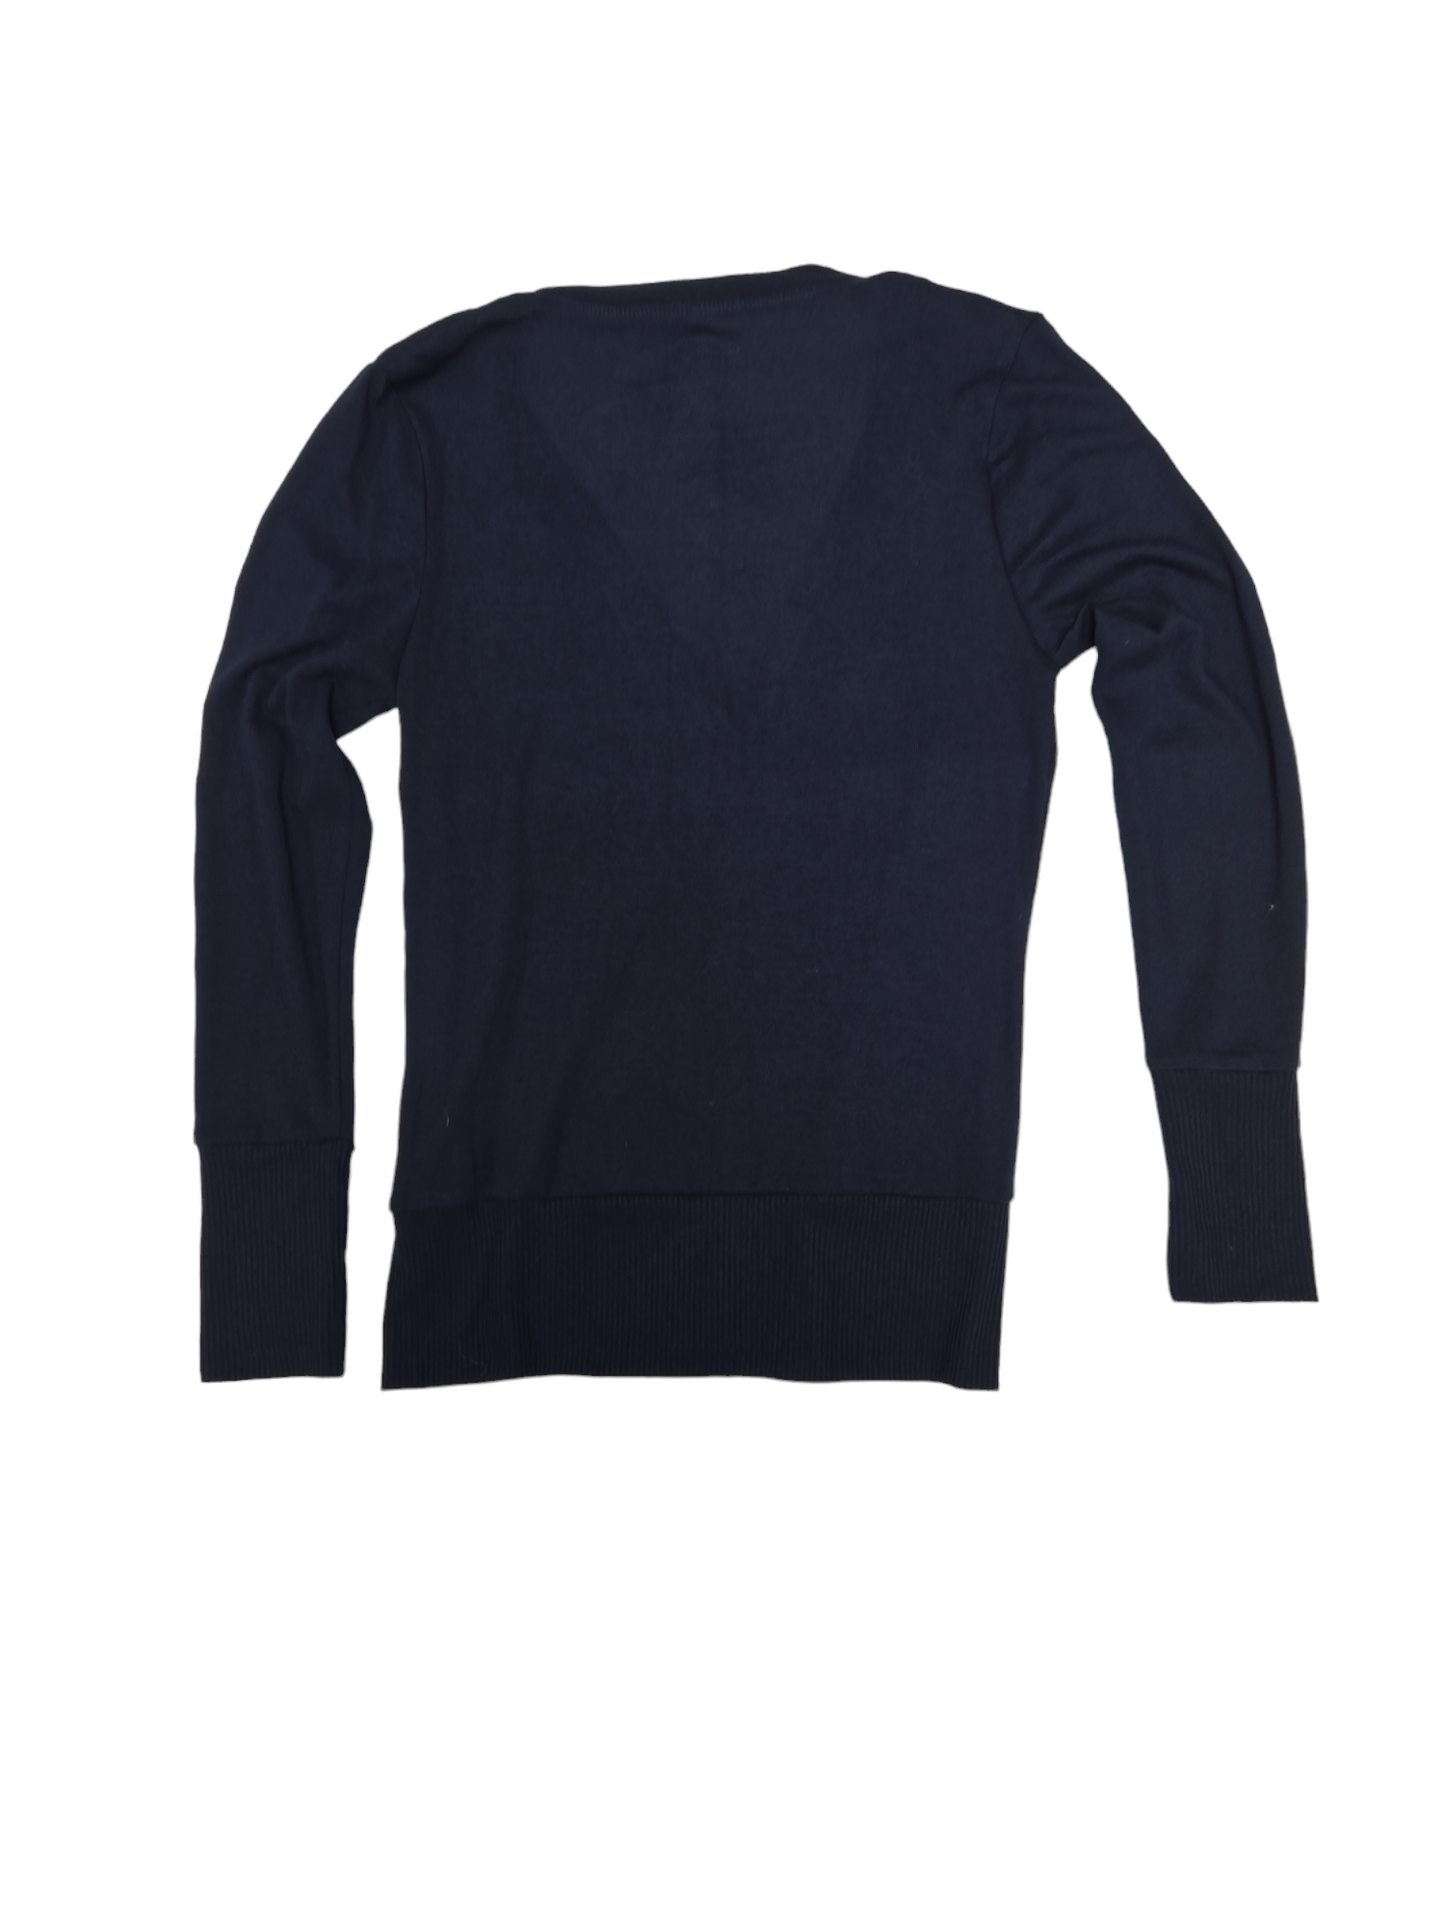 Zenana Sweater Size:Large